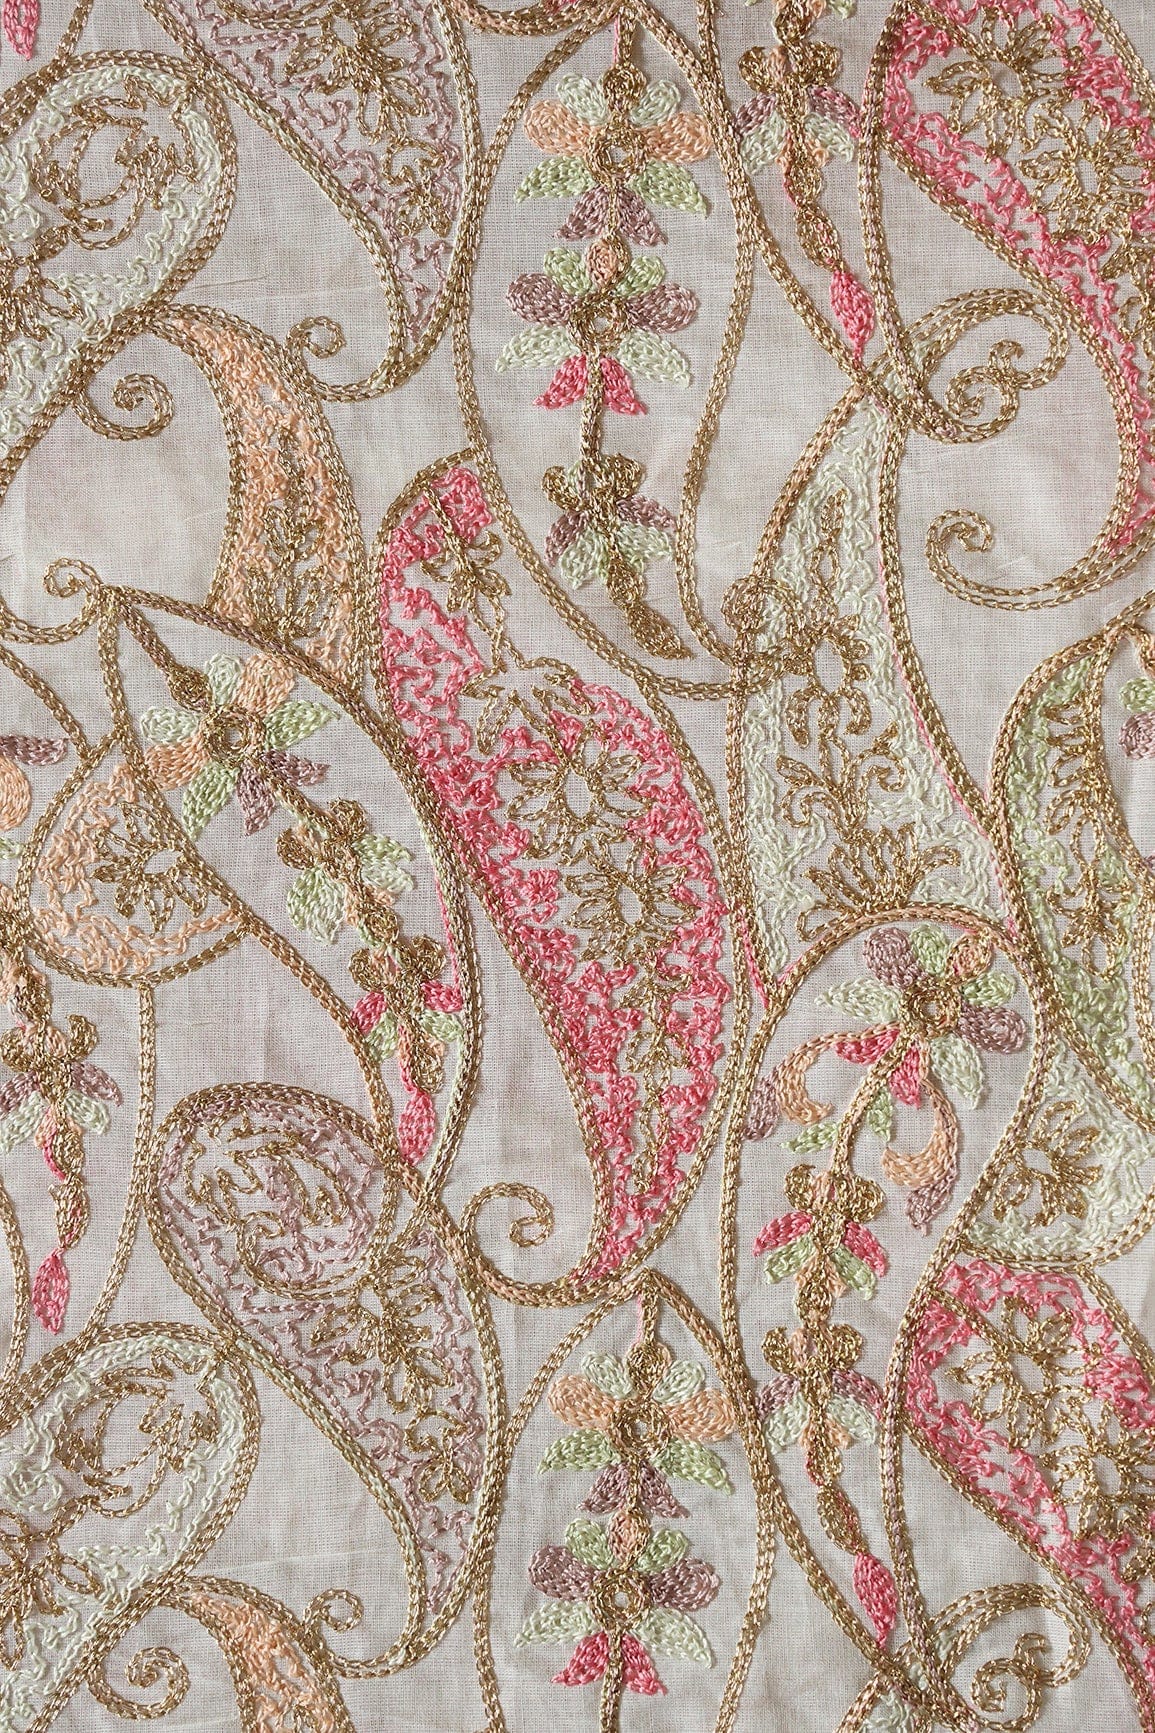 doeraa Embroidery Fabrics Multi Thread Beautiful Heavy Paisley Kashmiri Embroidery Work On Off White Organic Cotton Fabric